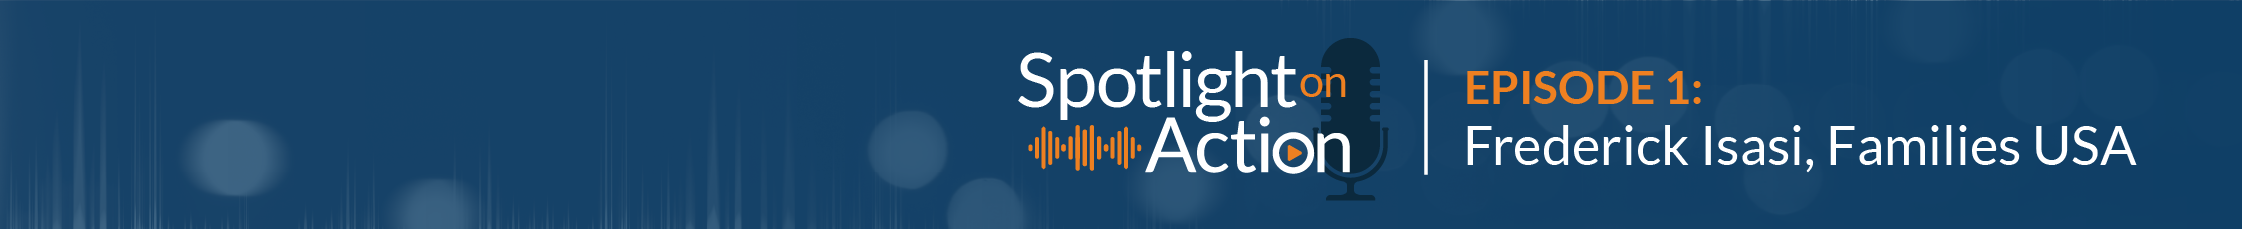 Spotlight on Action, Episode 1: Frederick Isasi, Families USA